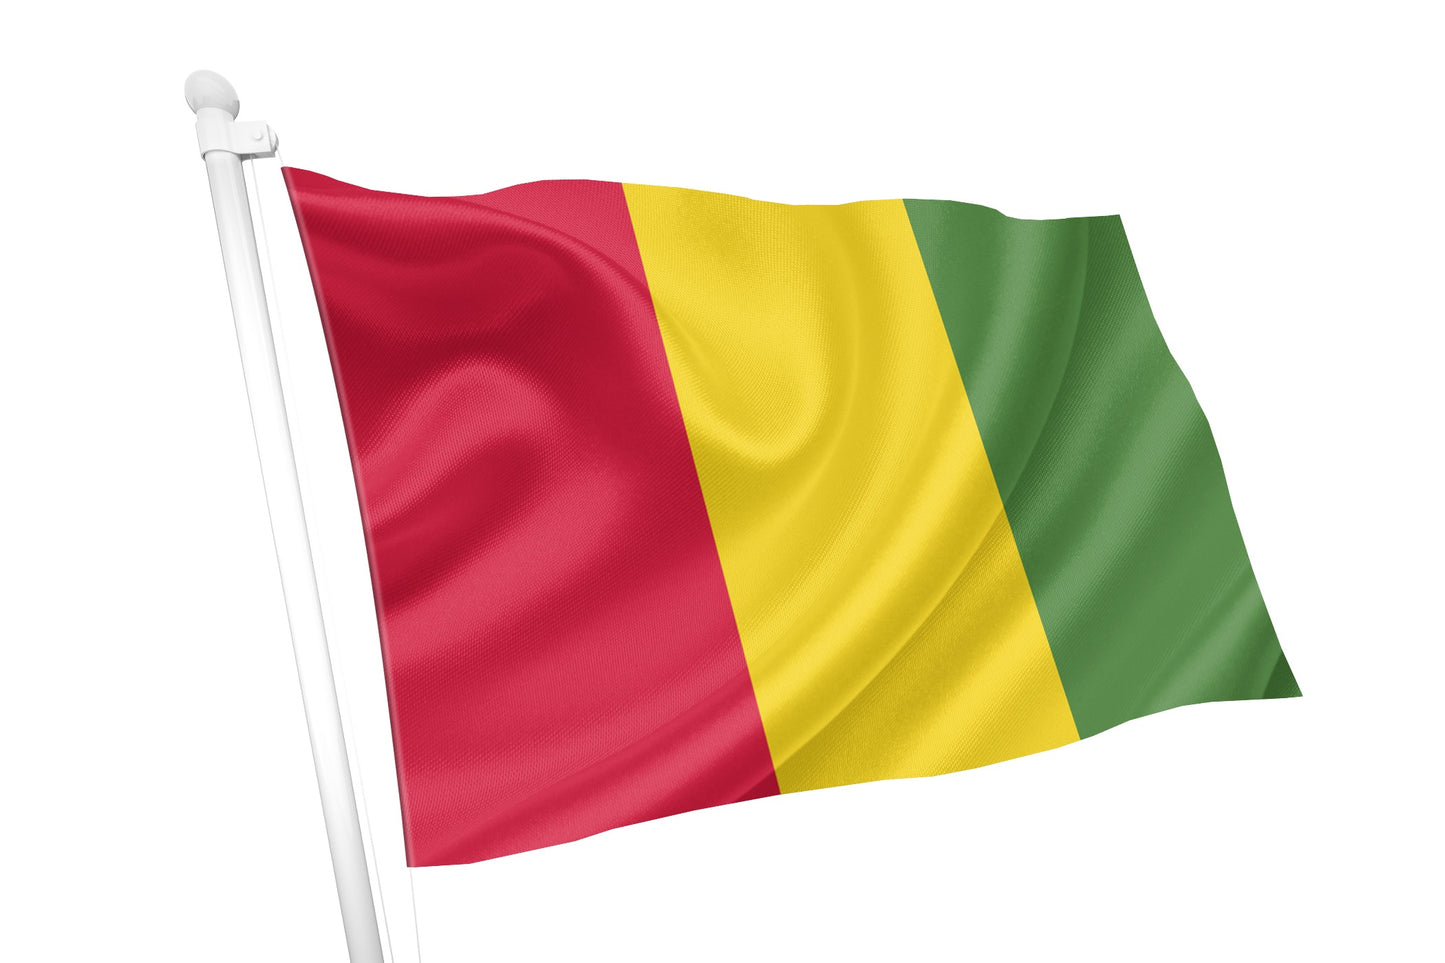 Guinea National Flag